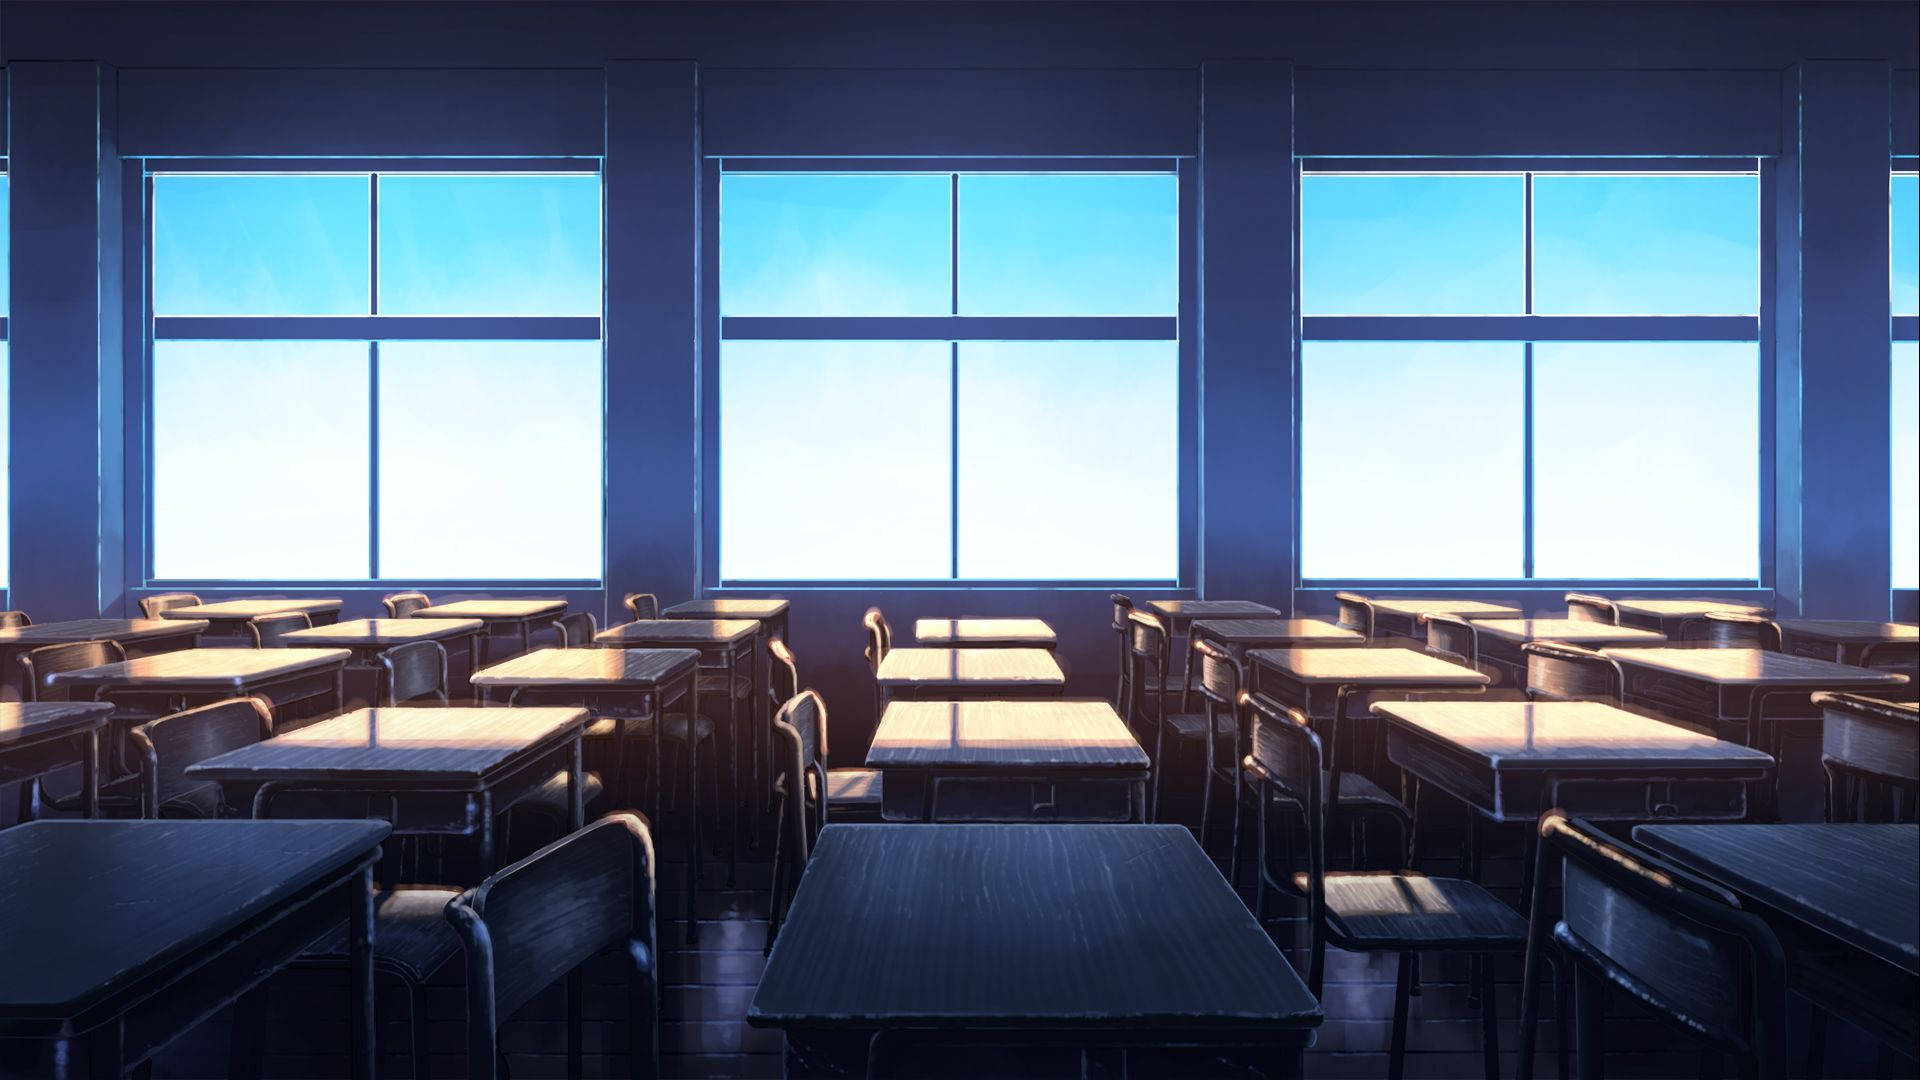 Dark Classroom With Bright Windows